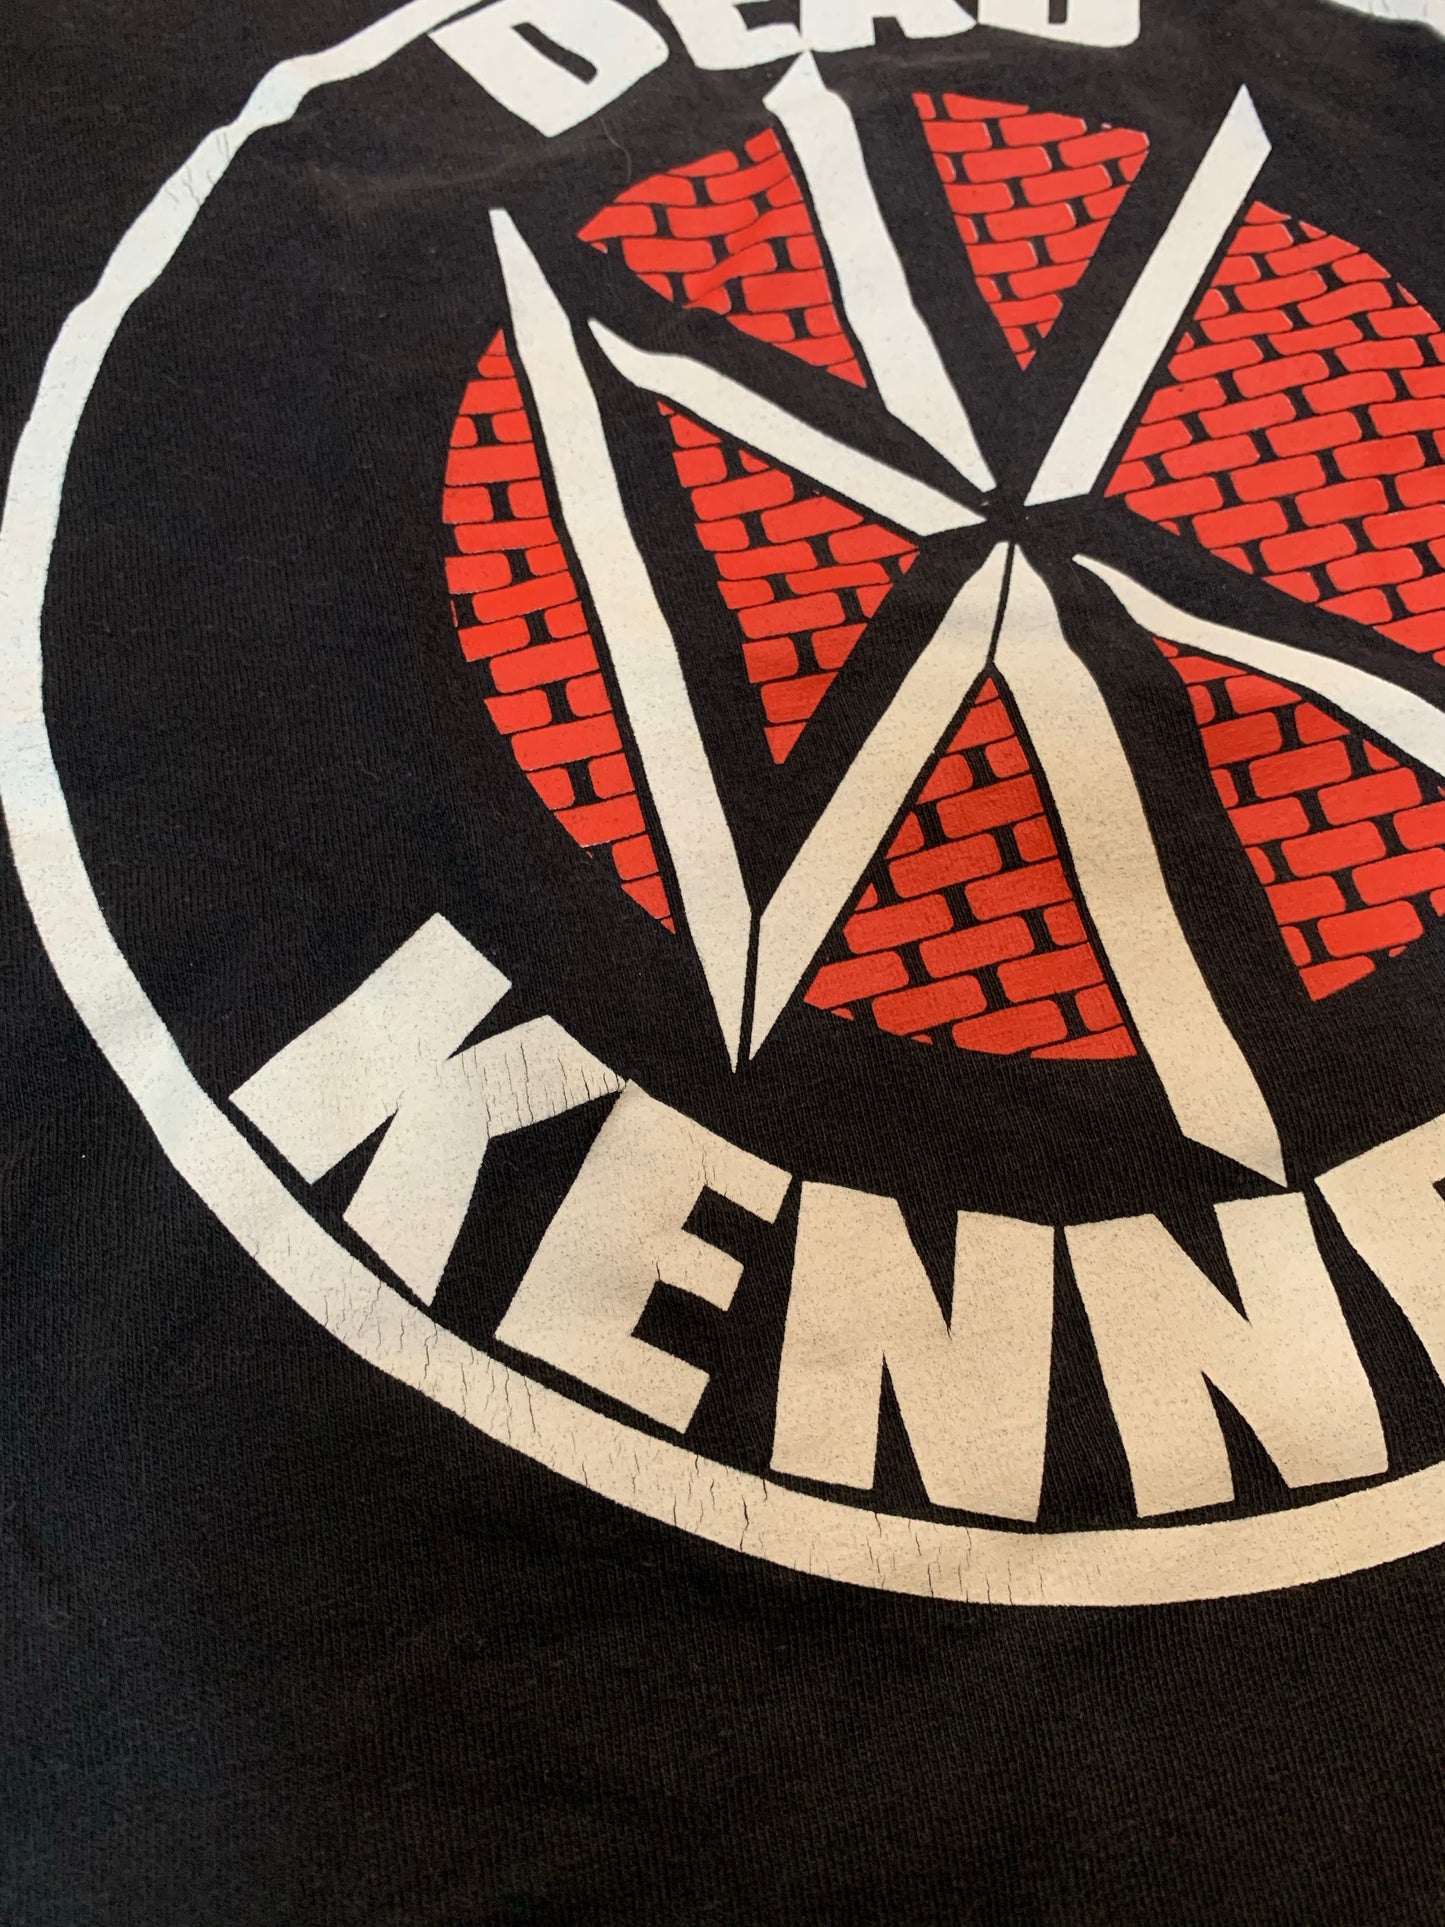 Pre-Loved Dead Kennedy’s Altered Sleeveless T-Shirt